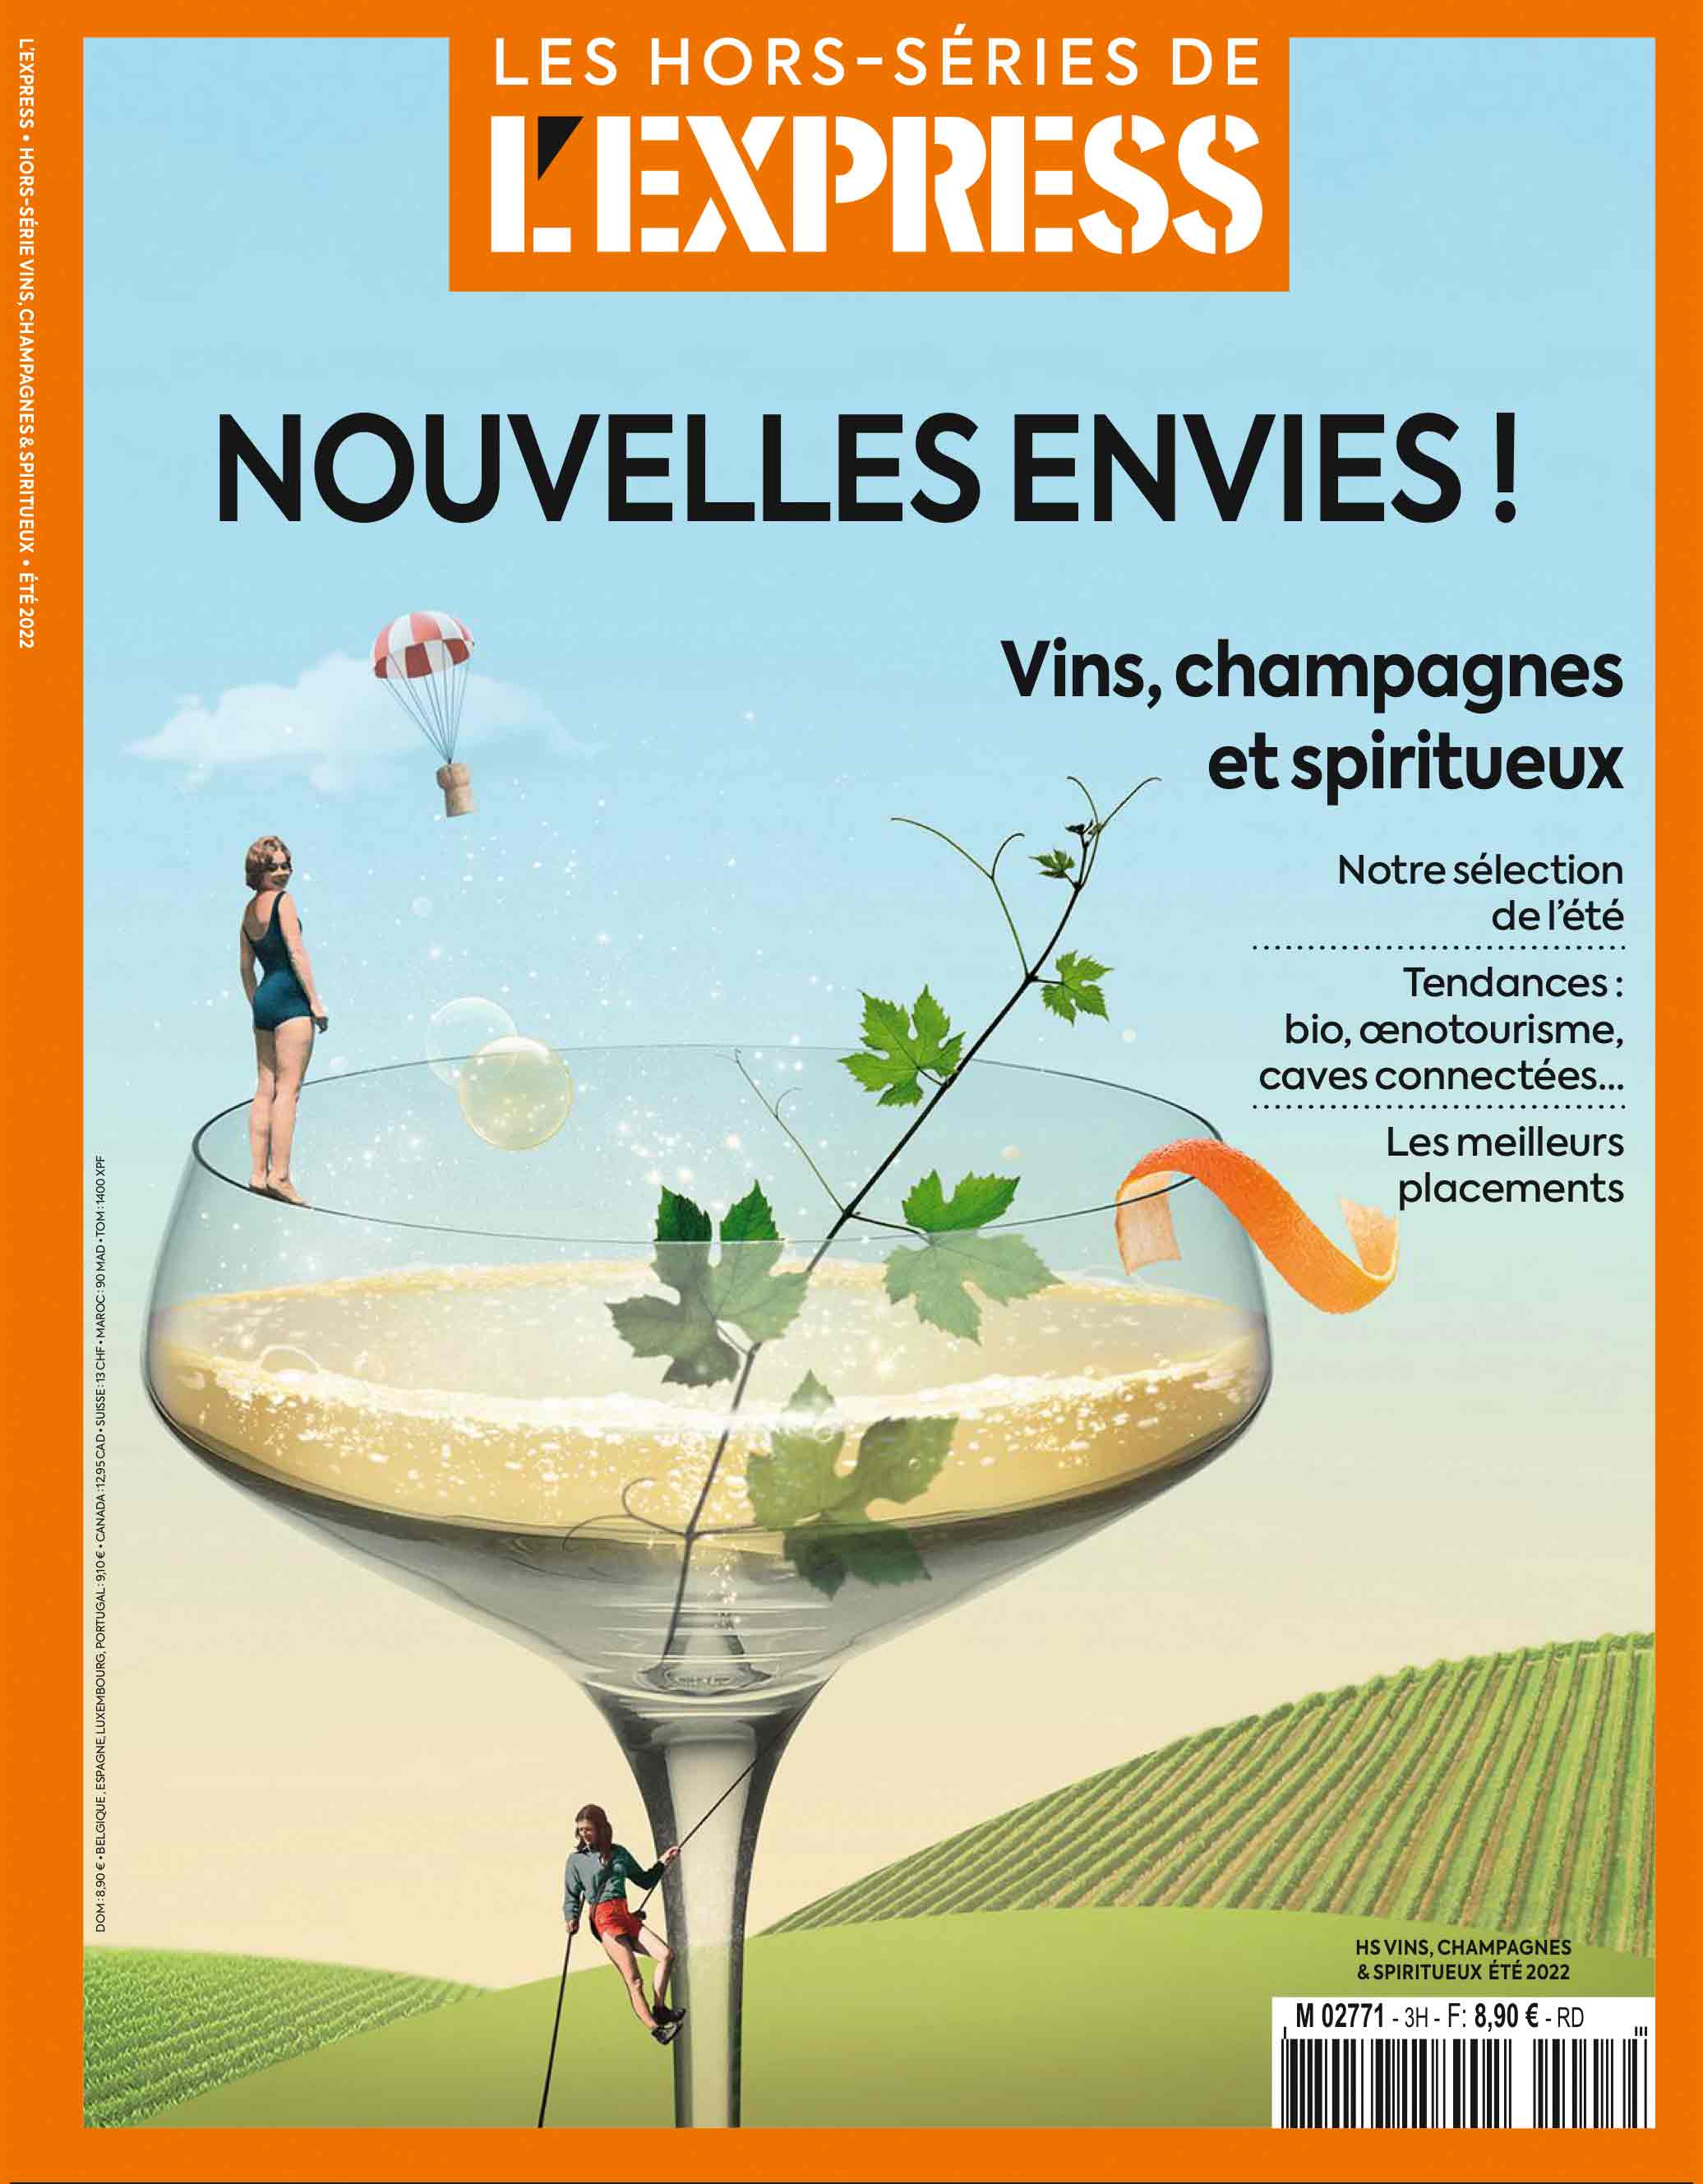 "NEW DESIRES" Cover L'Express Hors-Série Vins Champagnes & Spiritueux June 2022